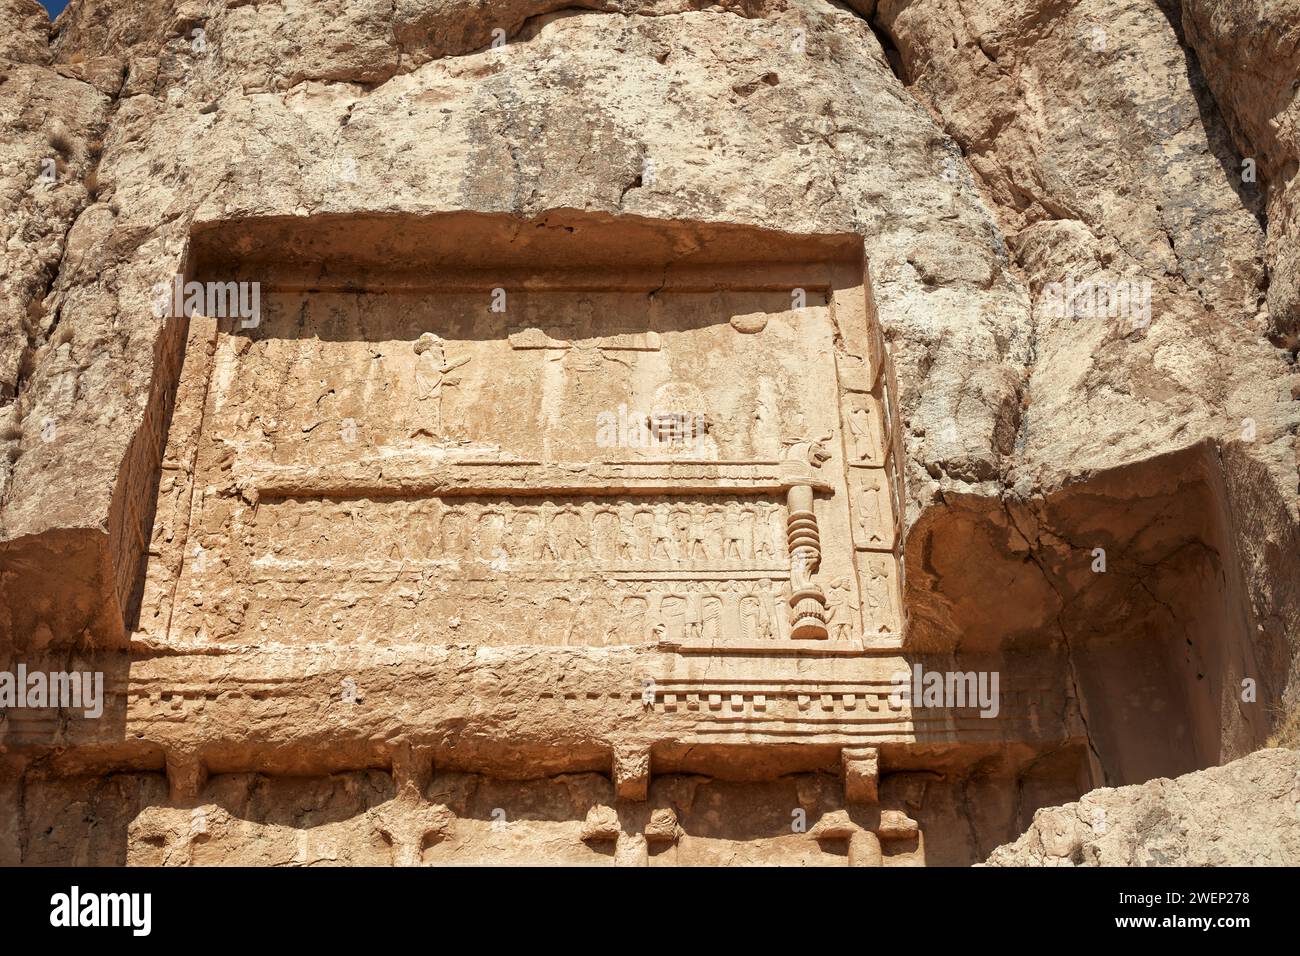 Parte superior de la tumba de Darío II, rey persa (423-405 a.C.) de la dinastía aqueménida, en la necrópolis de Naqsh-e Rostam, cerca de Persépolis, Irán. Foto de stock